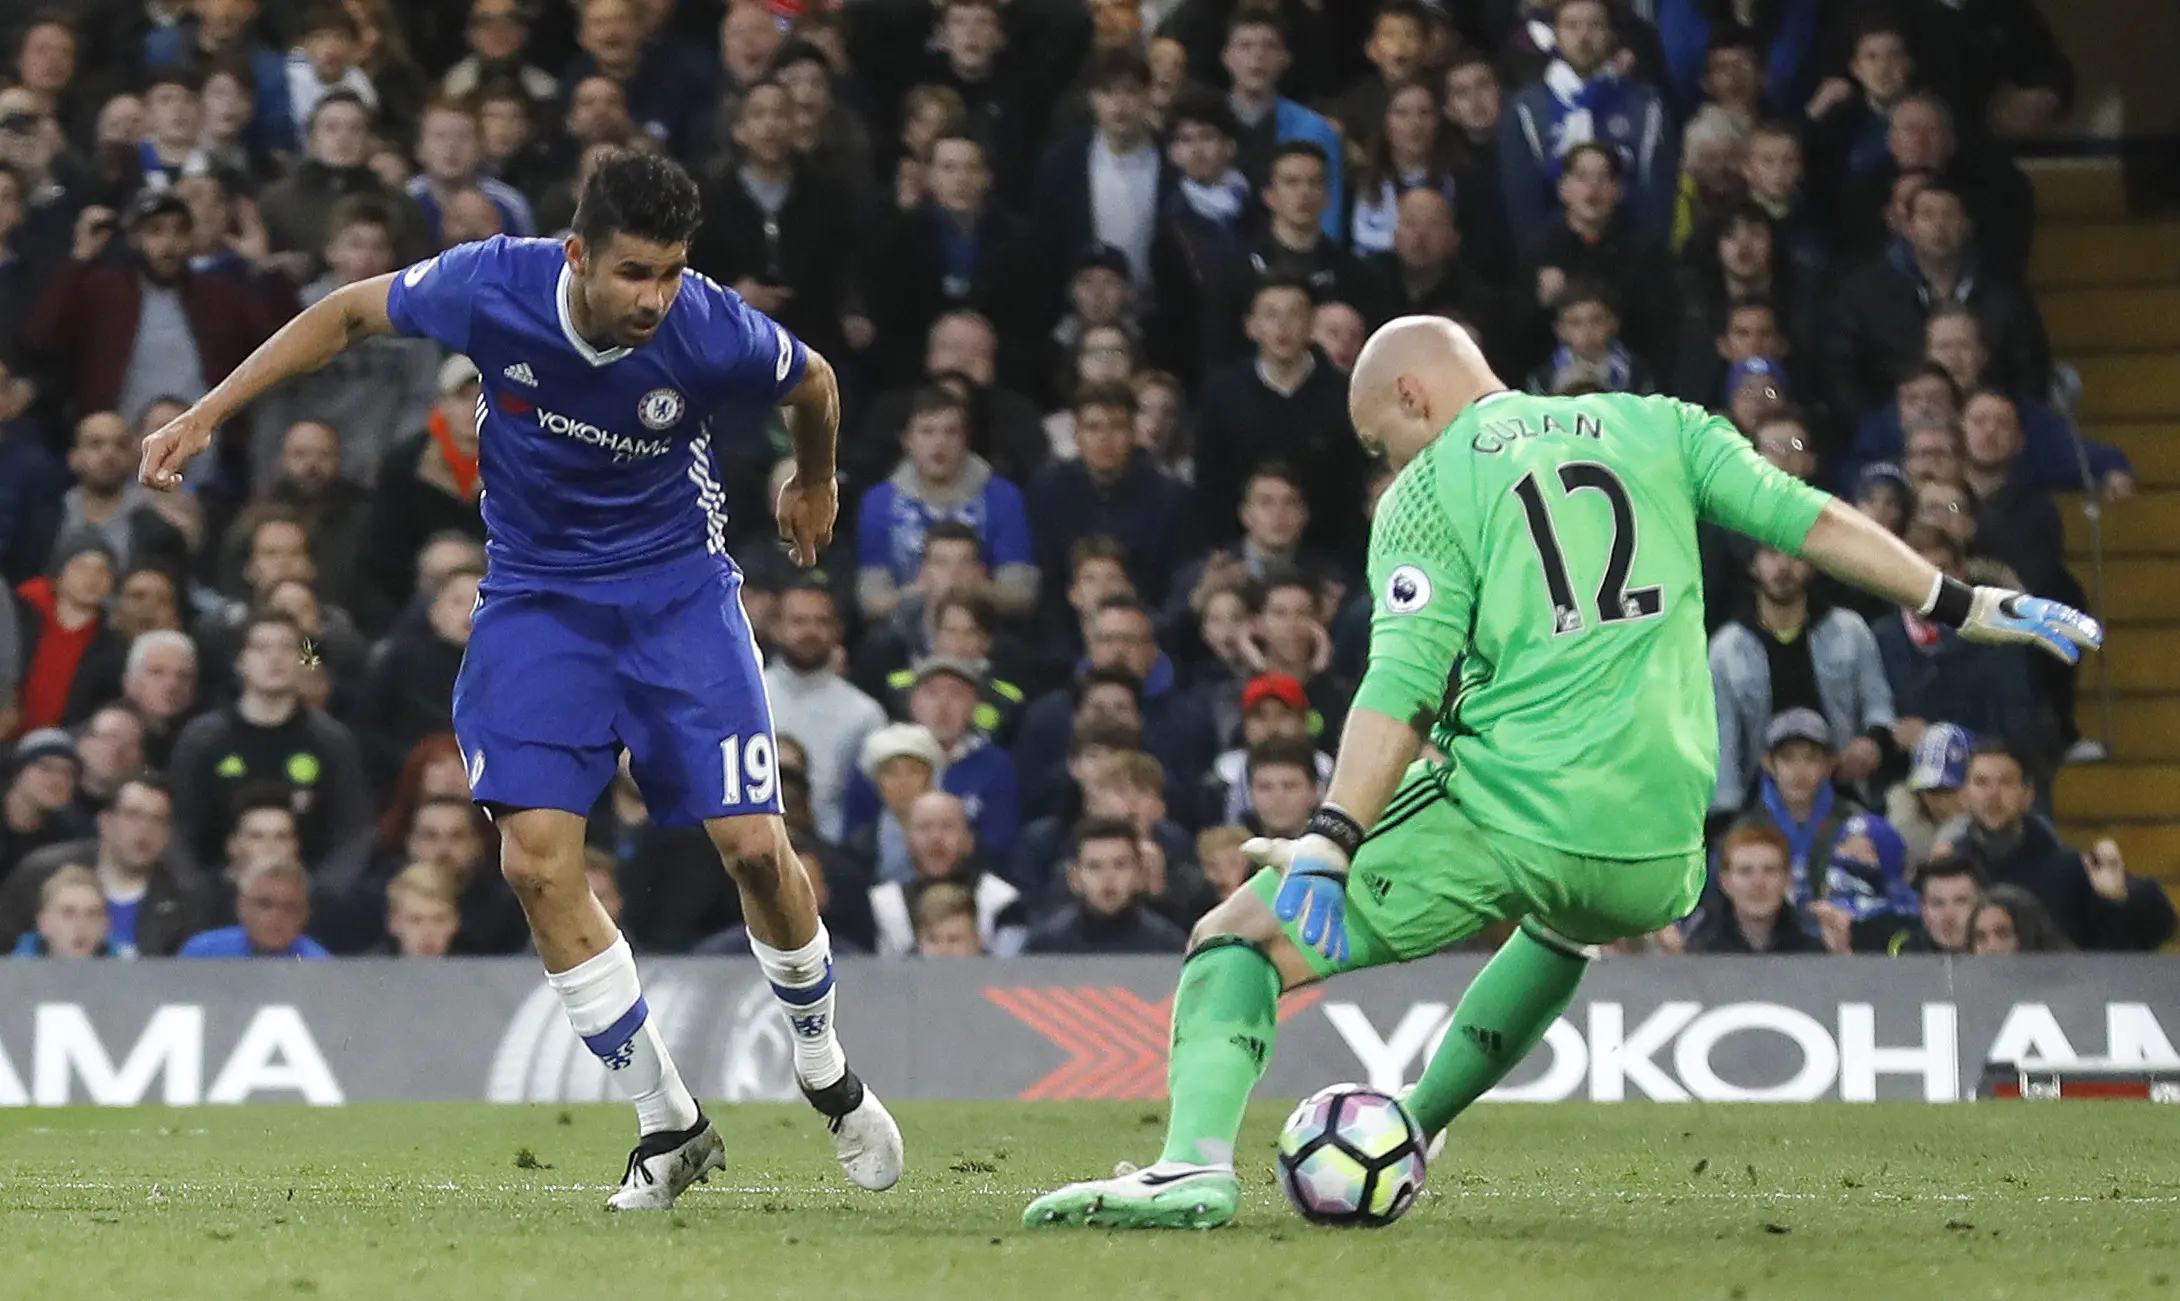 Penyerang Chelsea Diego Costa (kiri) mencetak gol ke gawang Middlesbrough dengan menendang bola melewati kaki kiper Brad Guzan. (AP Photo/Frank Augstein)